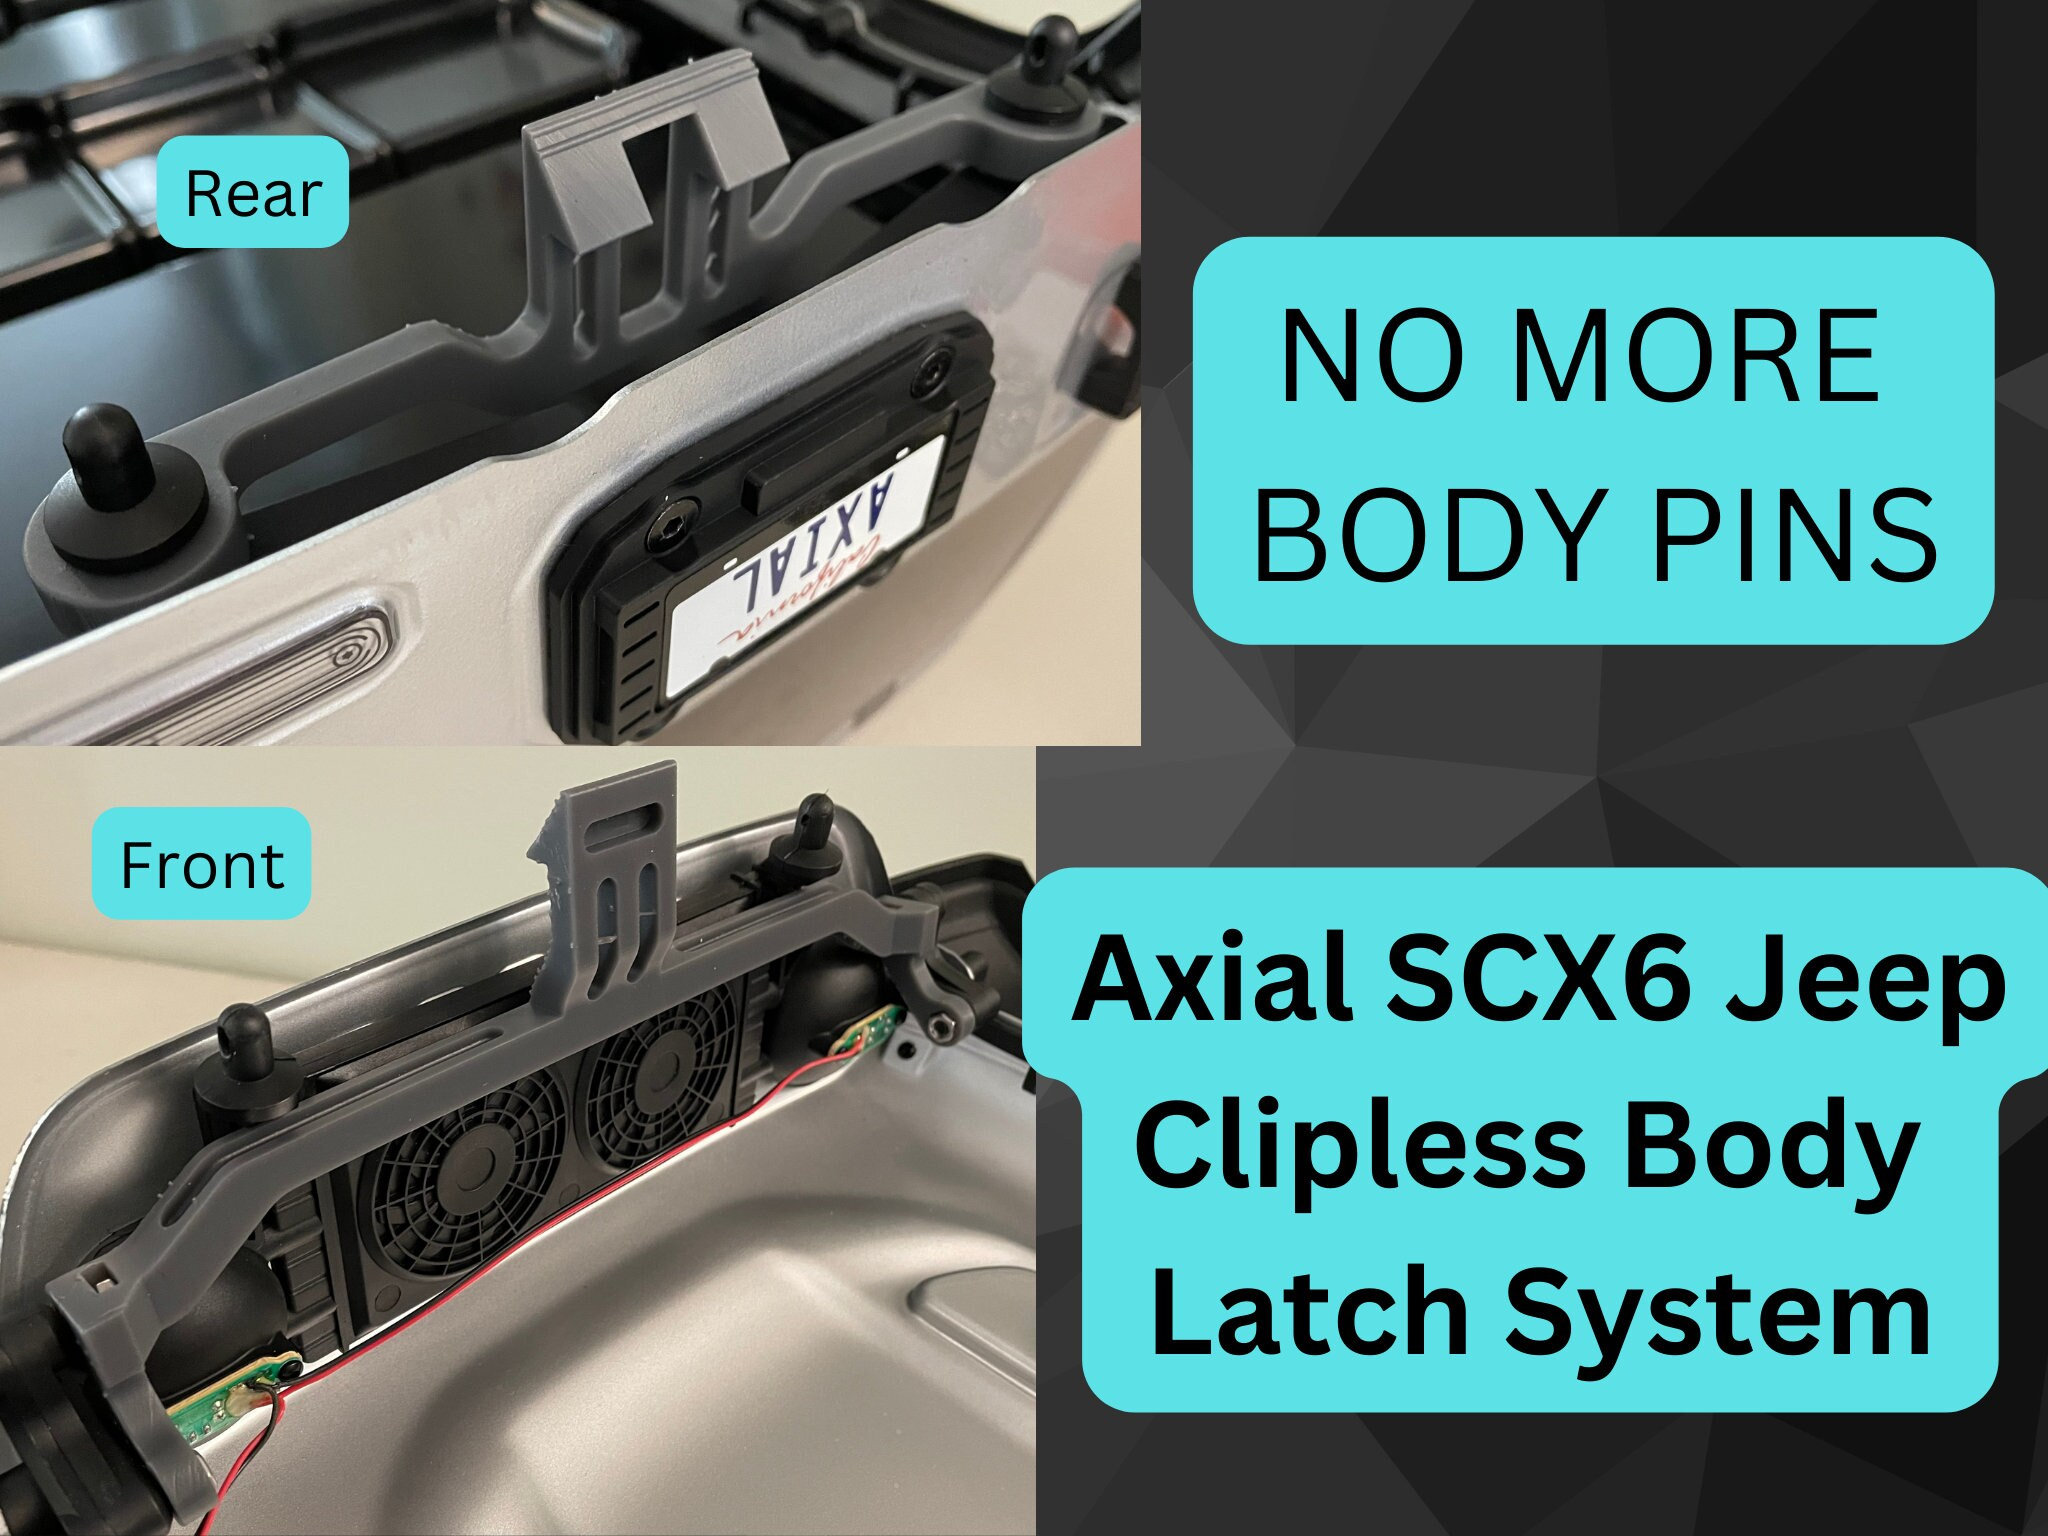 Clipless Body Mounts (Locking System) - For Traxxas TRX4/TRX6 Crawlers –  Fine Laser Designs